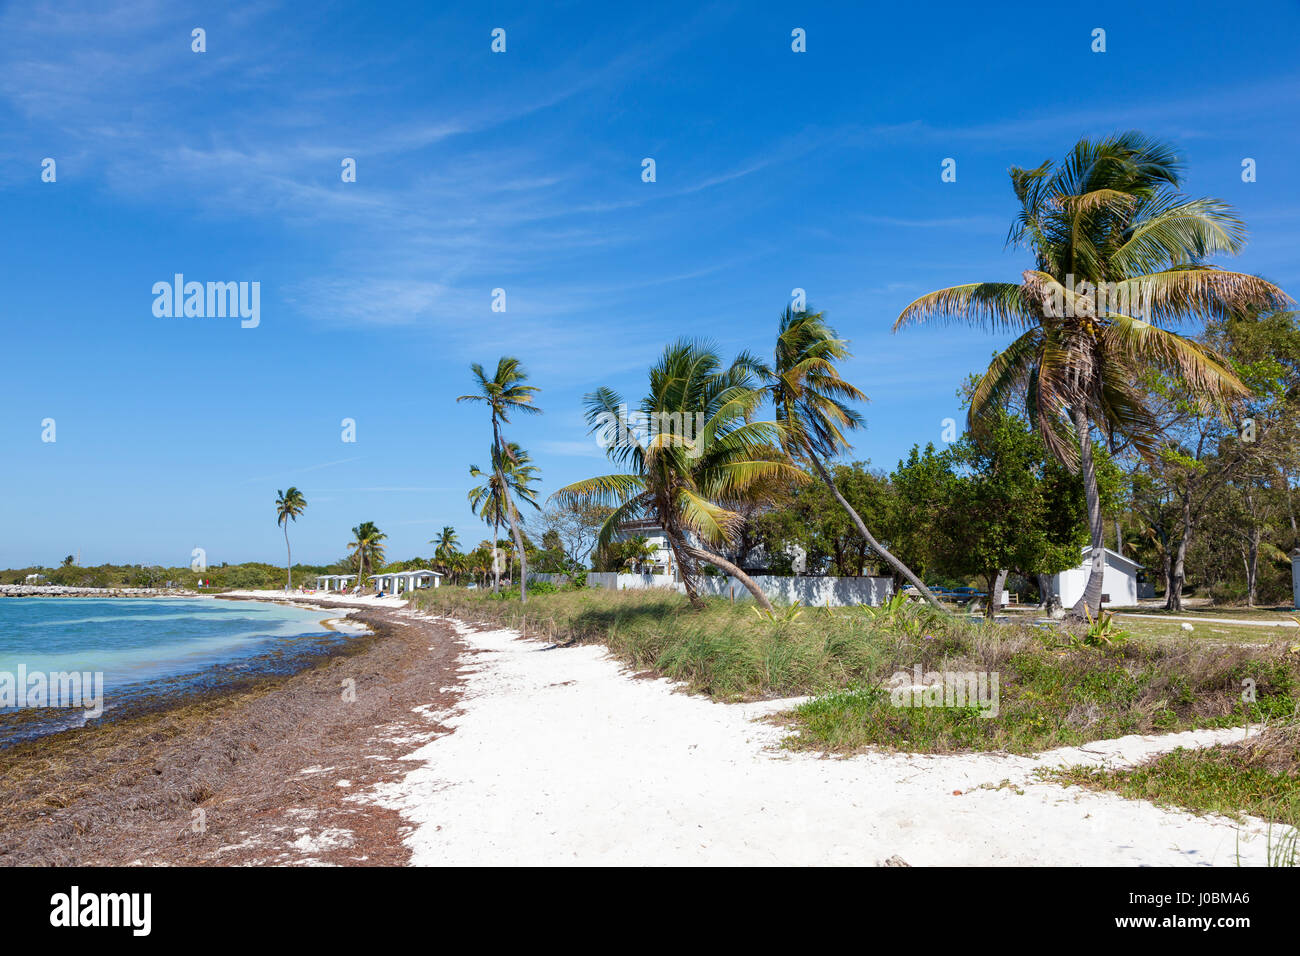 Belle plage de sable blanc du Bahia Honda key state park. Florida Keys, United States Banque D'Images